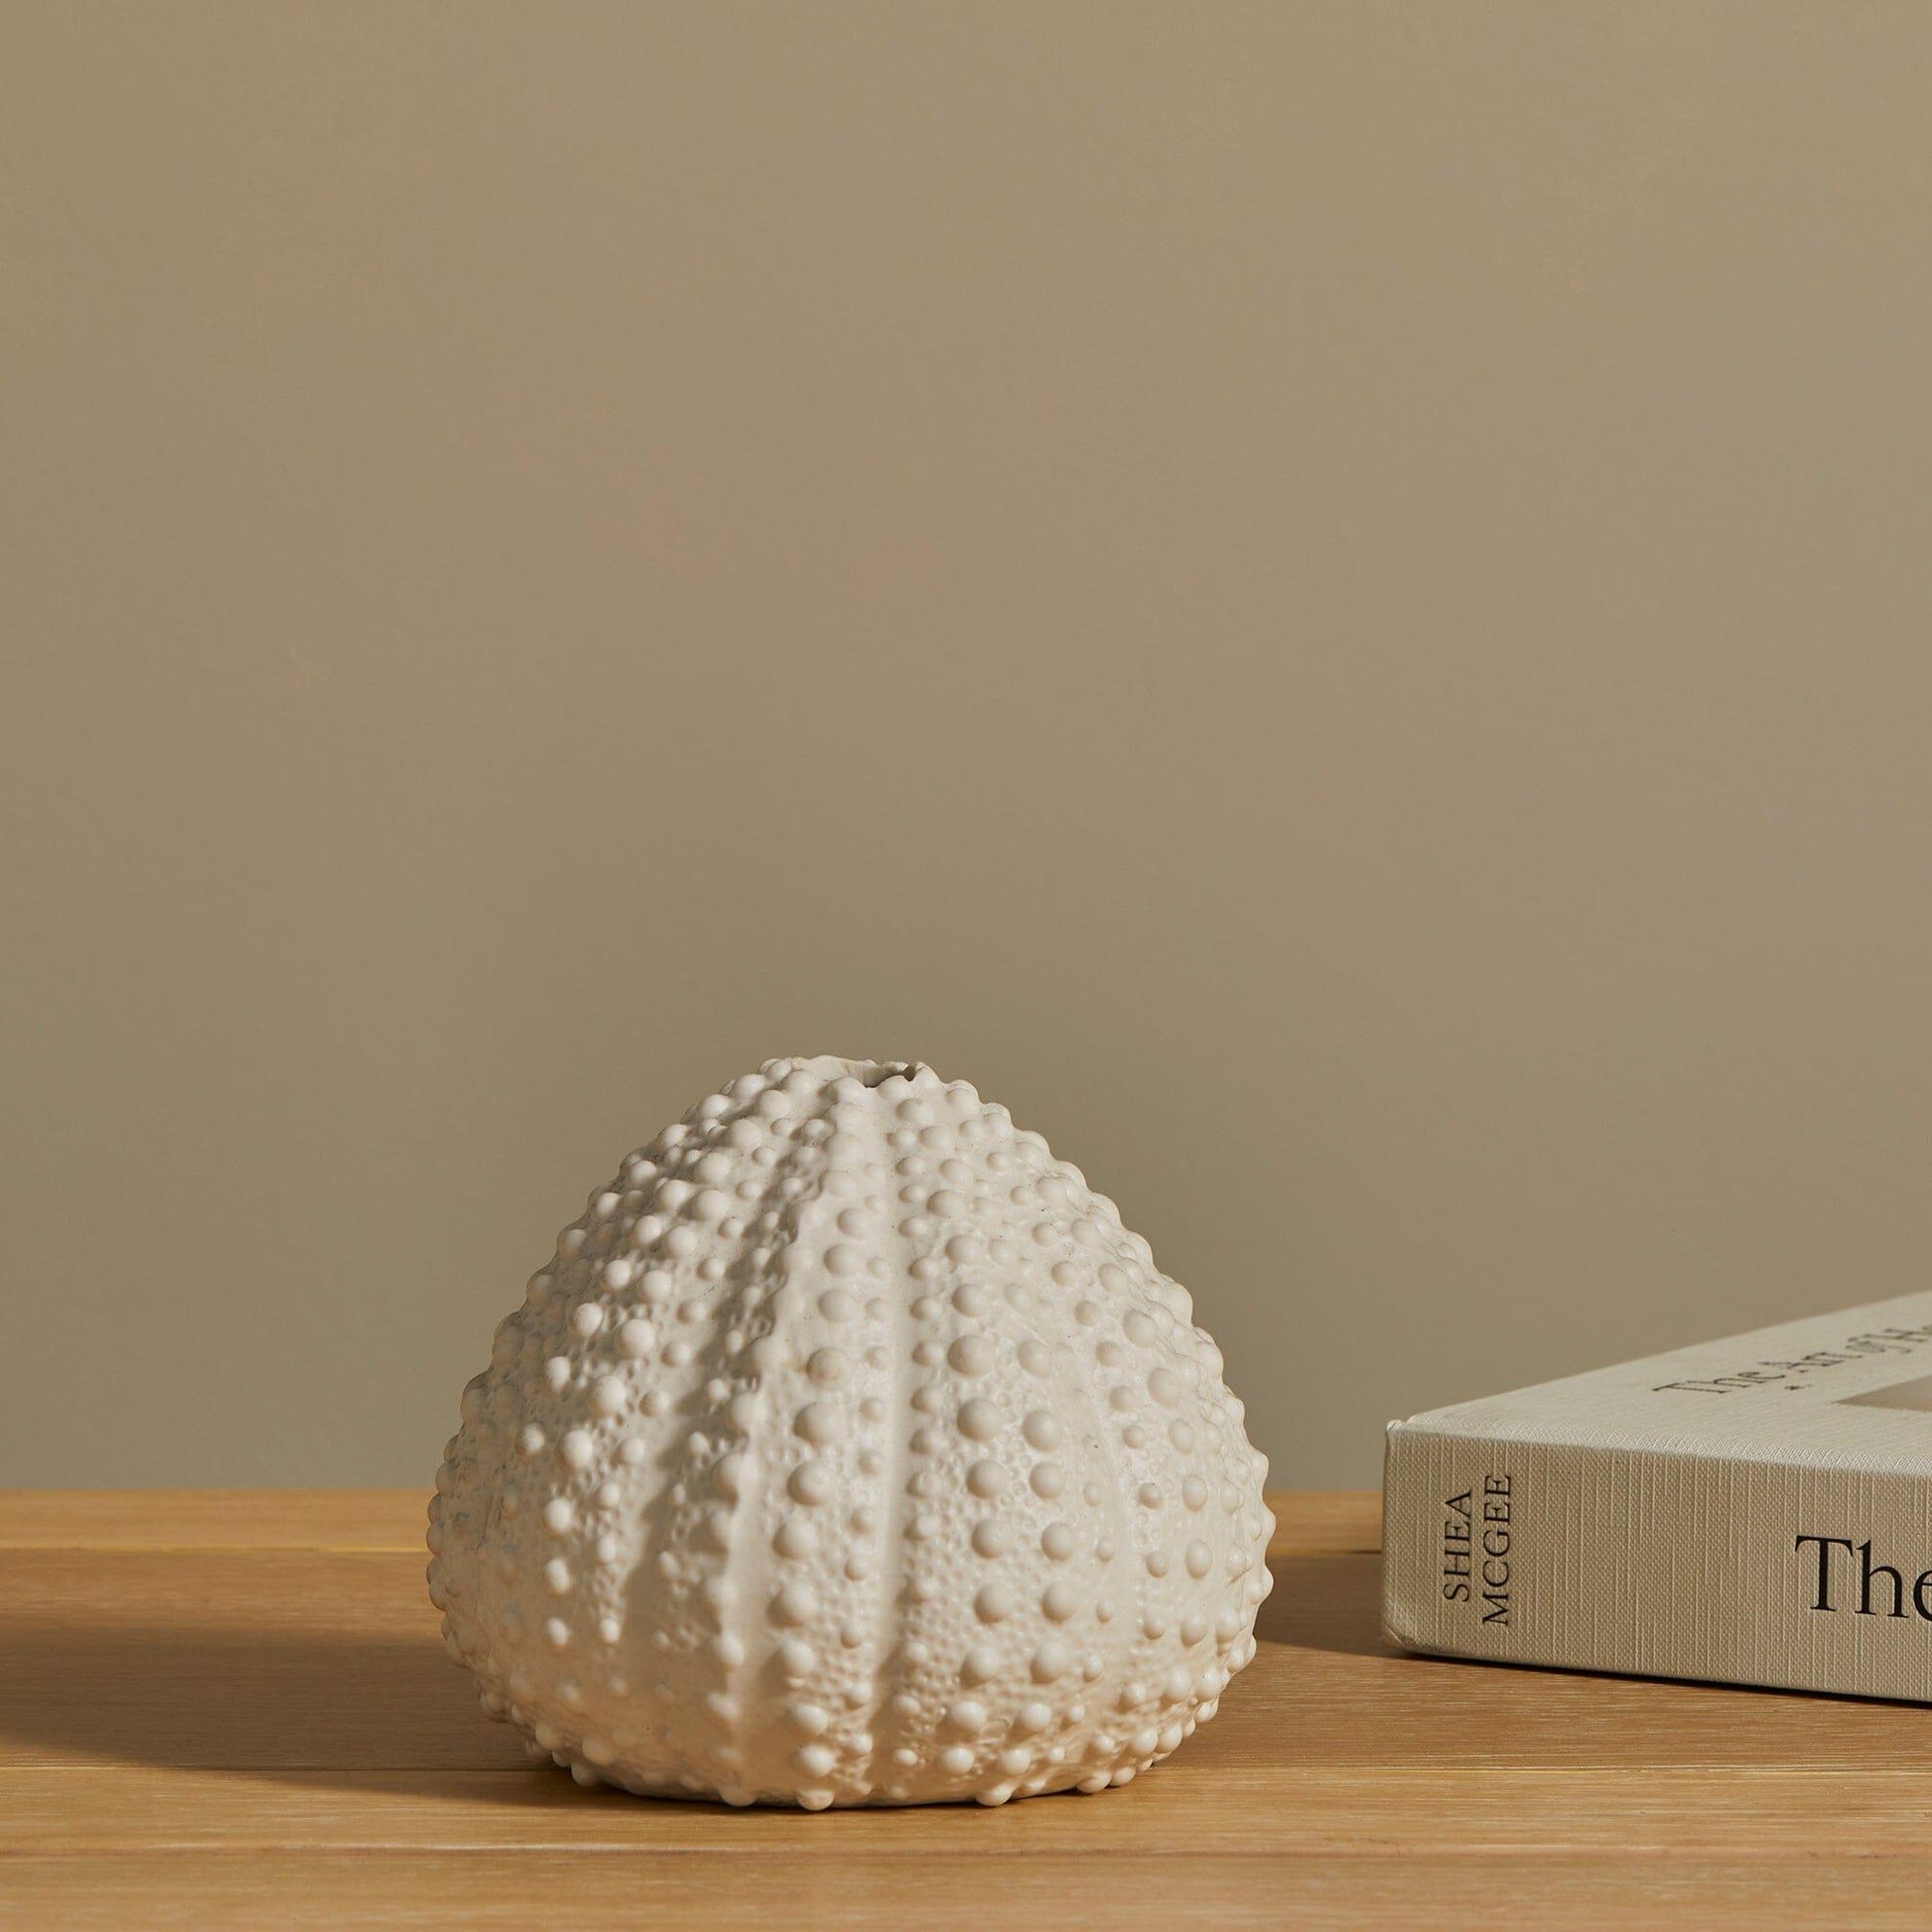 Thurnham 11cm Ceramic Sea Urchin Ornament - White - Laura James